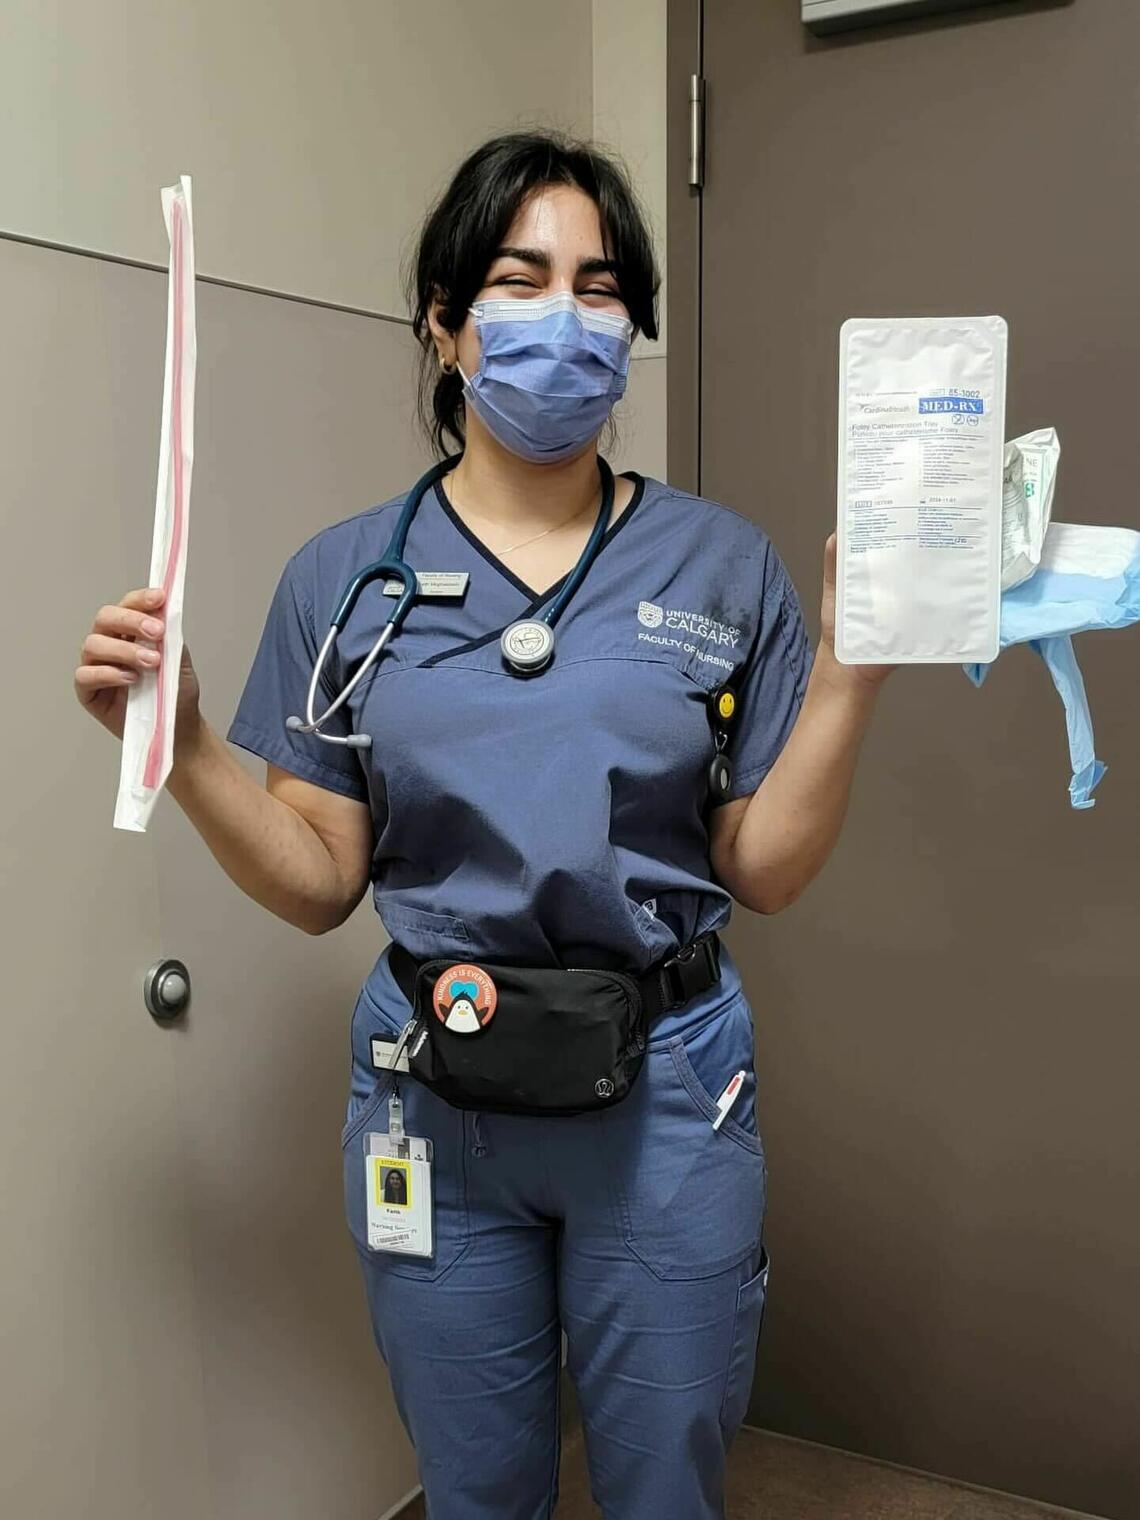 Nurse holding catheterization supplies in hospital